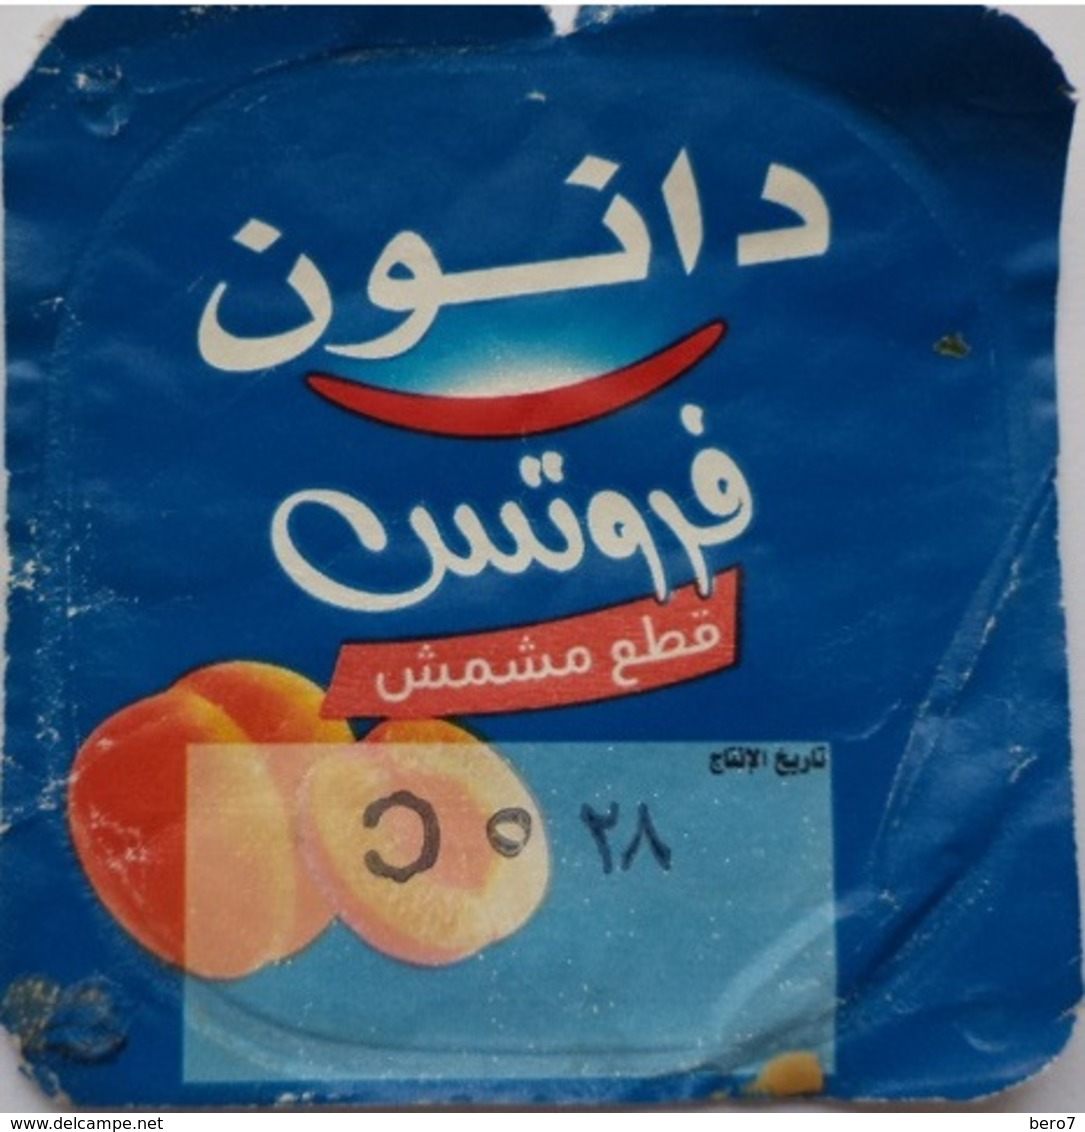 Egypt - Couvercle De Yoghurt  Danone Arabic Fruits  (foil) (Egypte) (Egitto) (Ägypten) (Egipto) (Egypten) Africa - Milk Tops (Milk Lids)